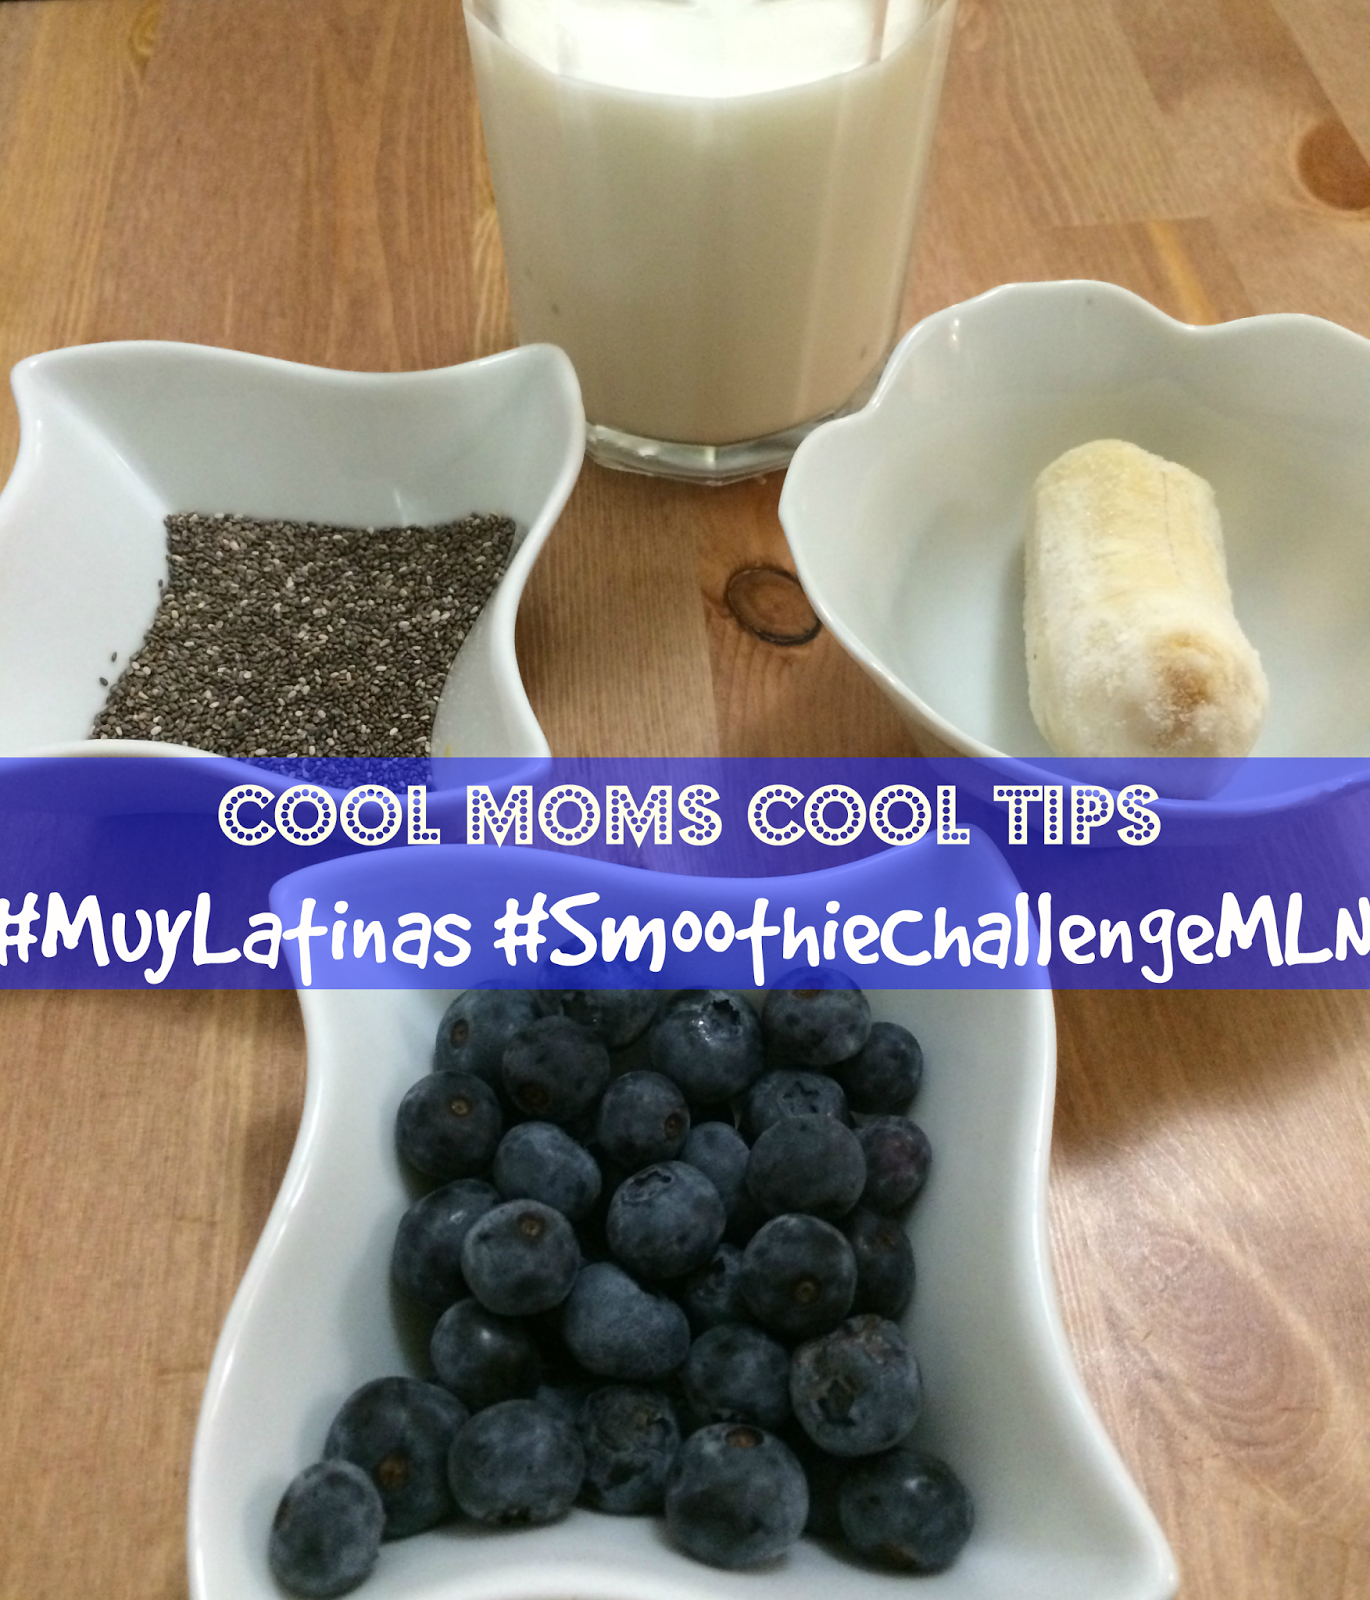 cool moms cool tips #smoothiechallengemln ingredients